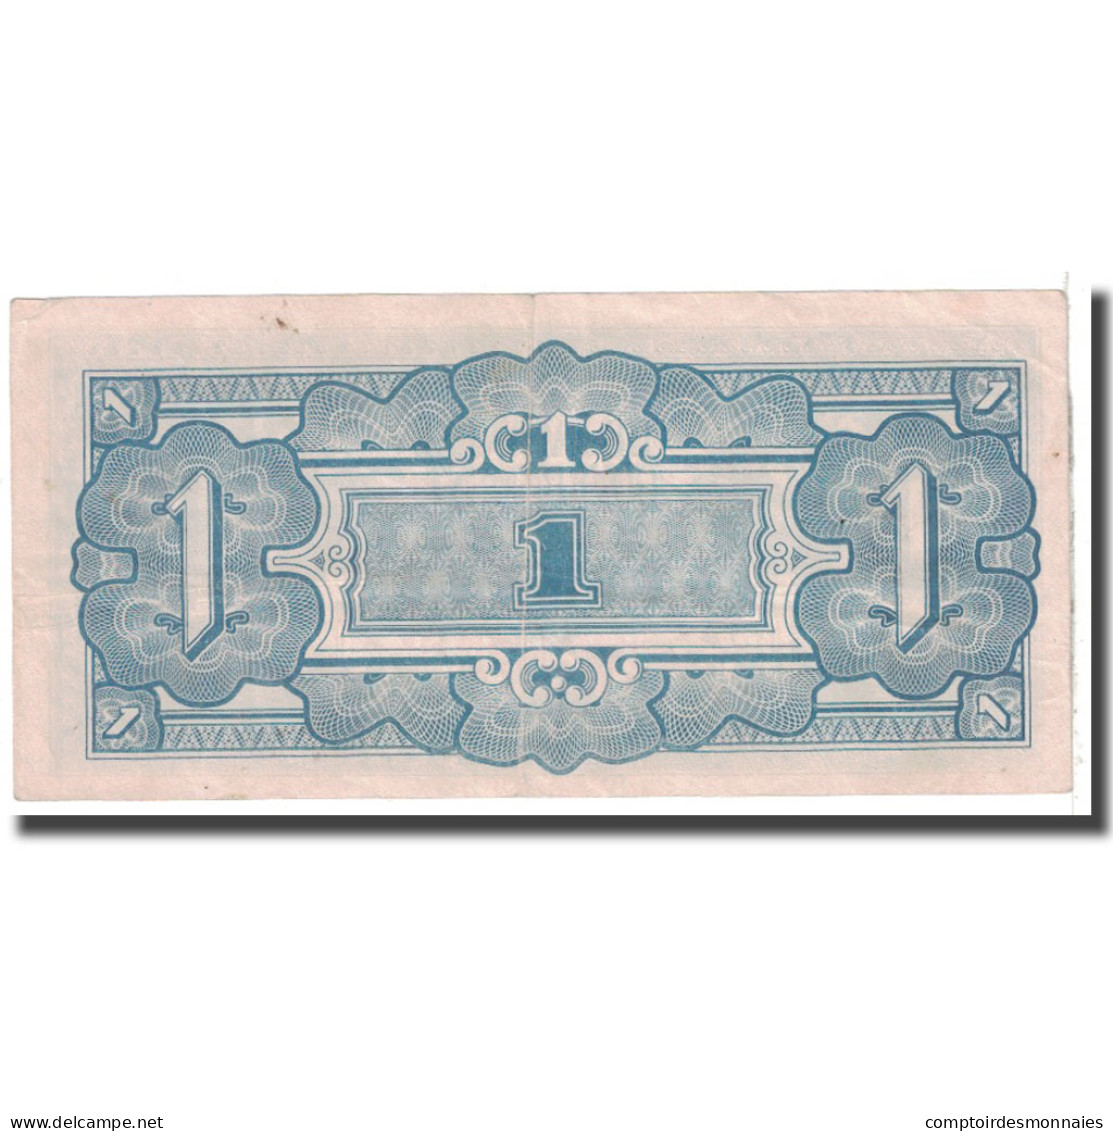 Billet, MALAYA, 1 Dollar, 1942, KM:M5c, TTB - Malesia